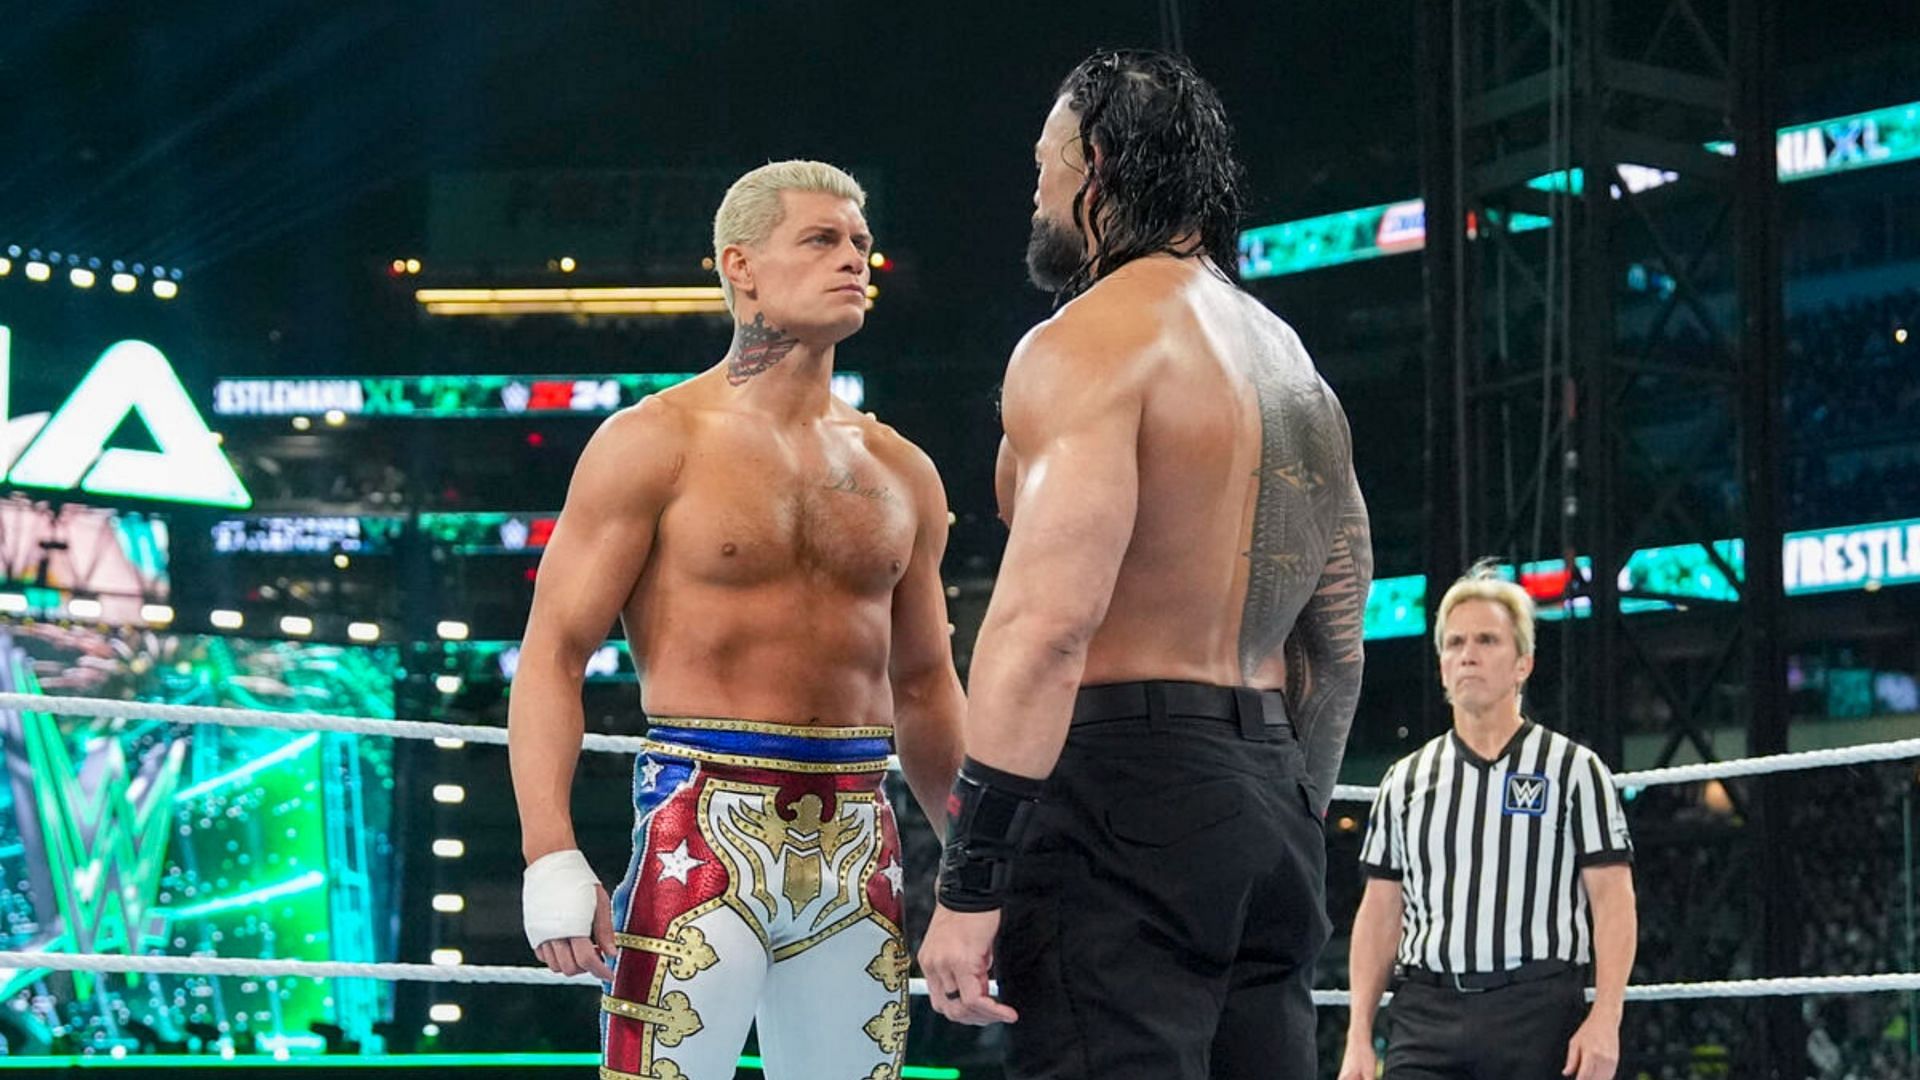 Cody Rhodes vs Roman Reigns at WWE WrestleMania XL